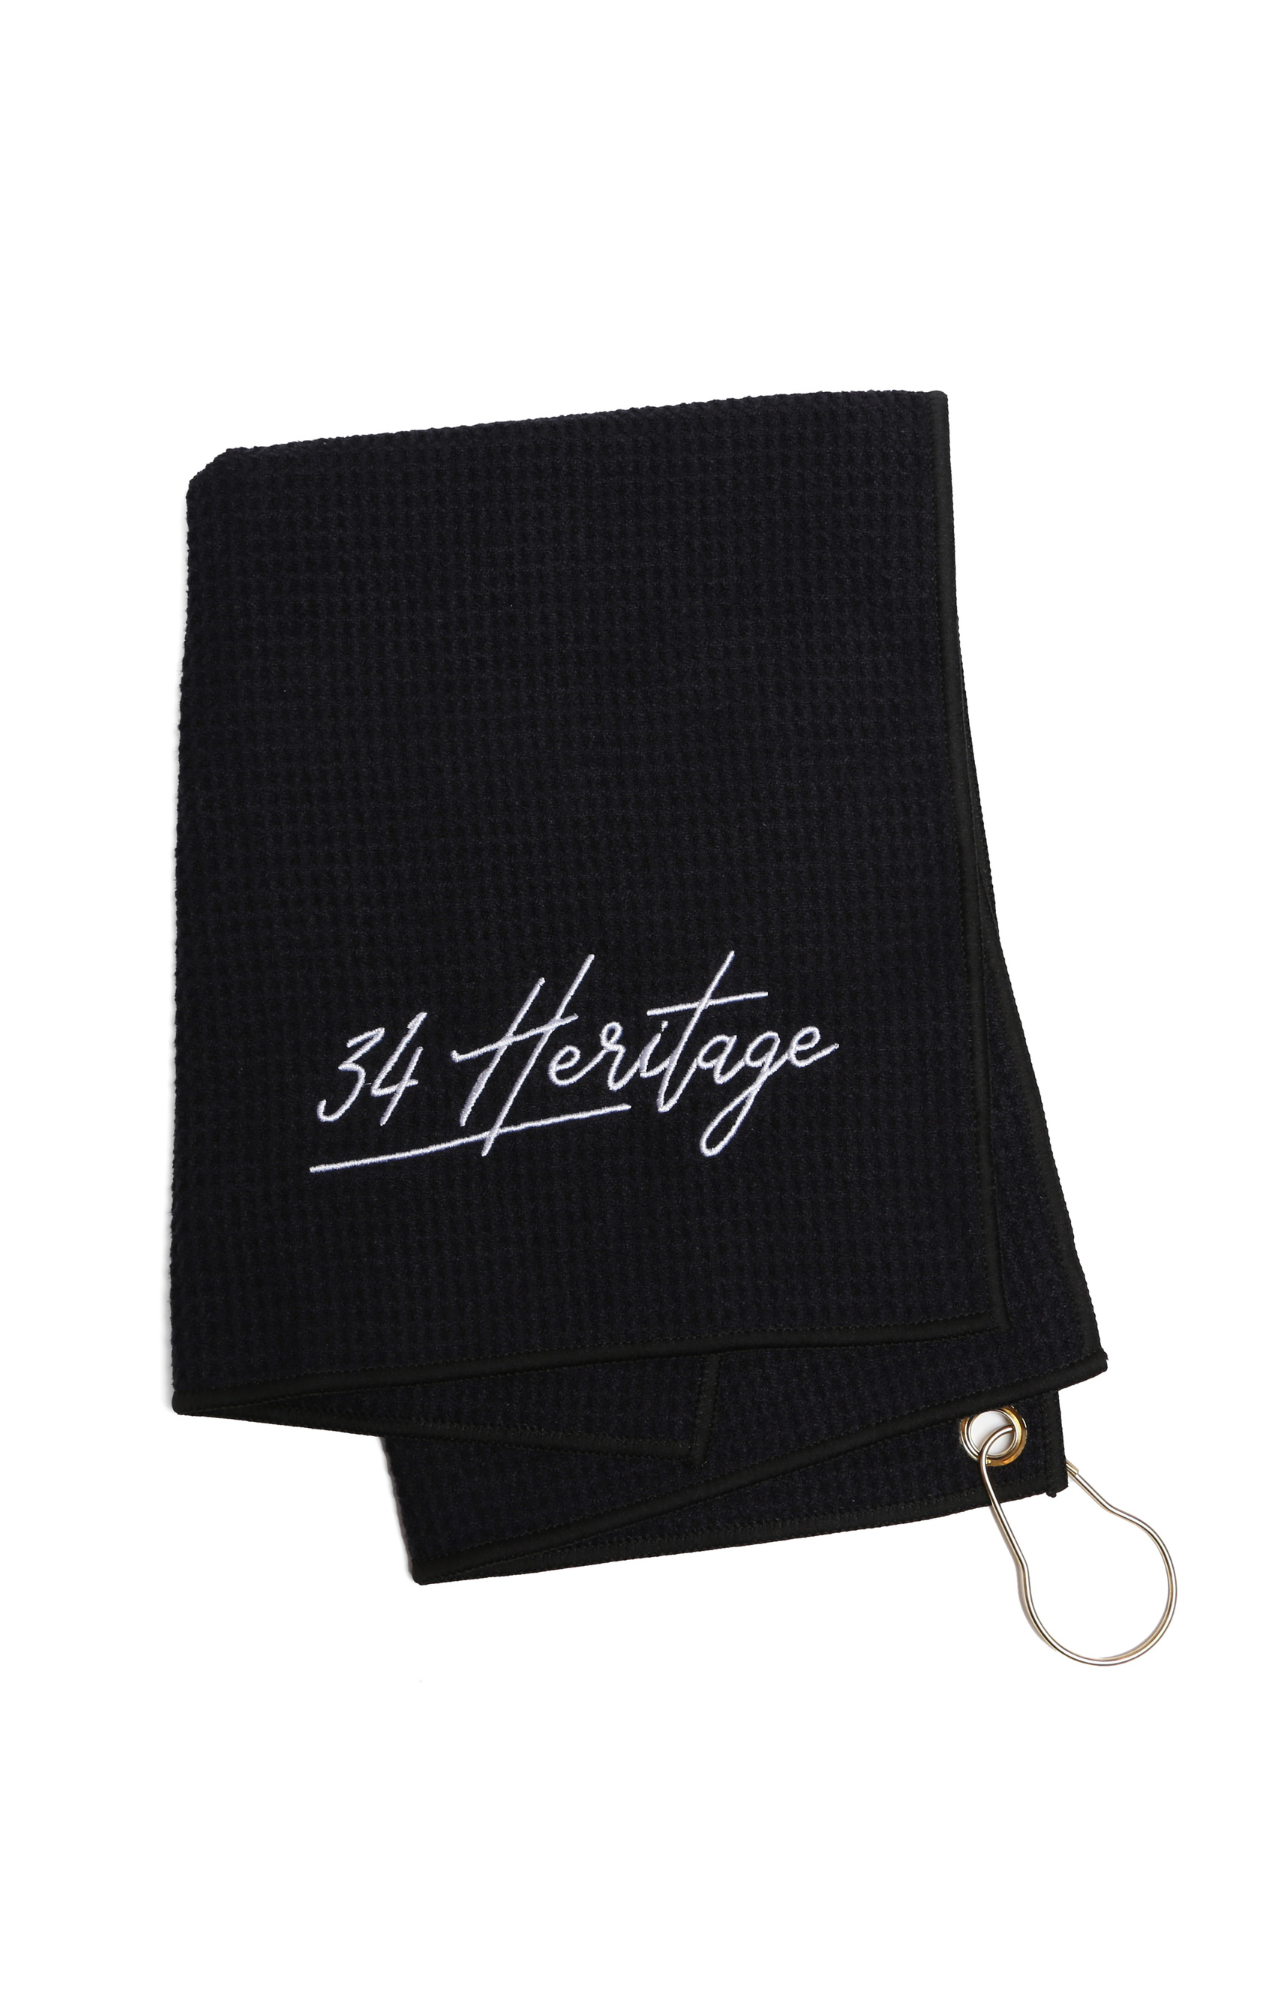 34 Heritage Golf Kit